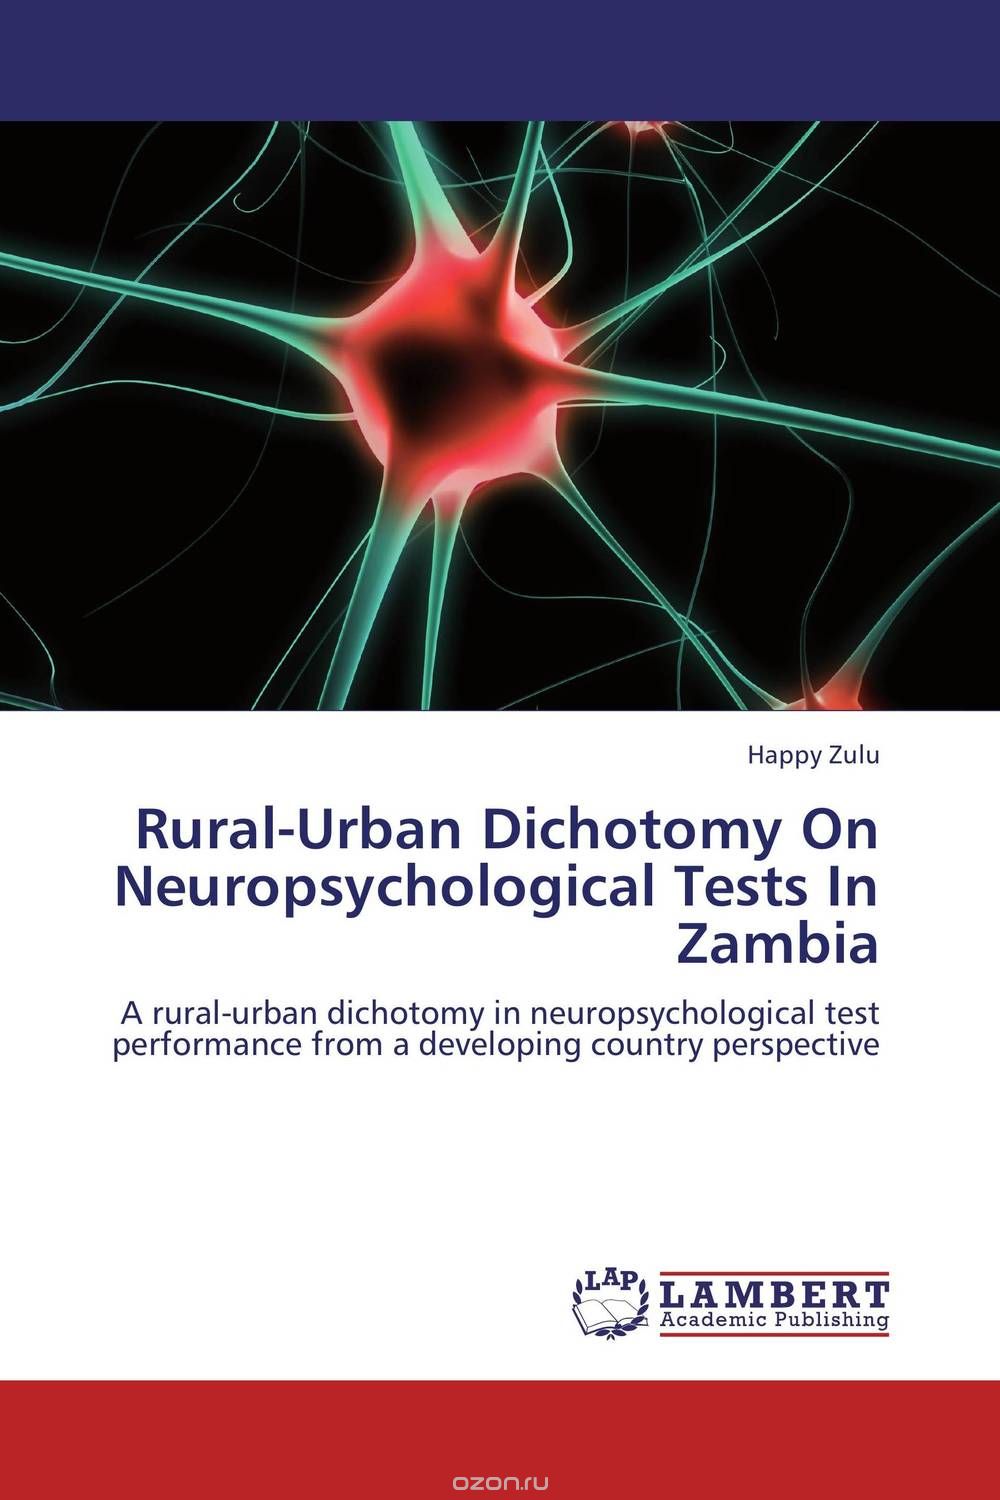 Rural-Urban Dichotomy On Neuropsychological Tests In Zambia